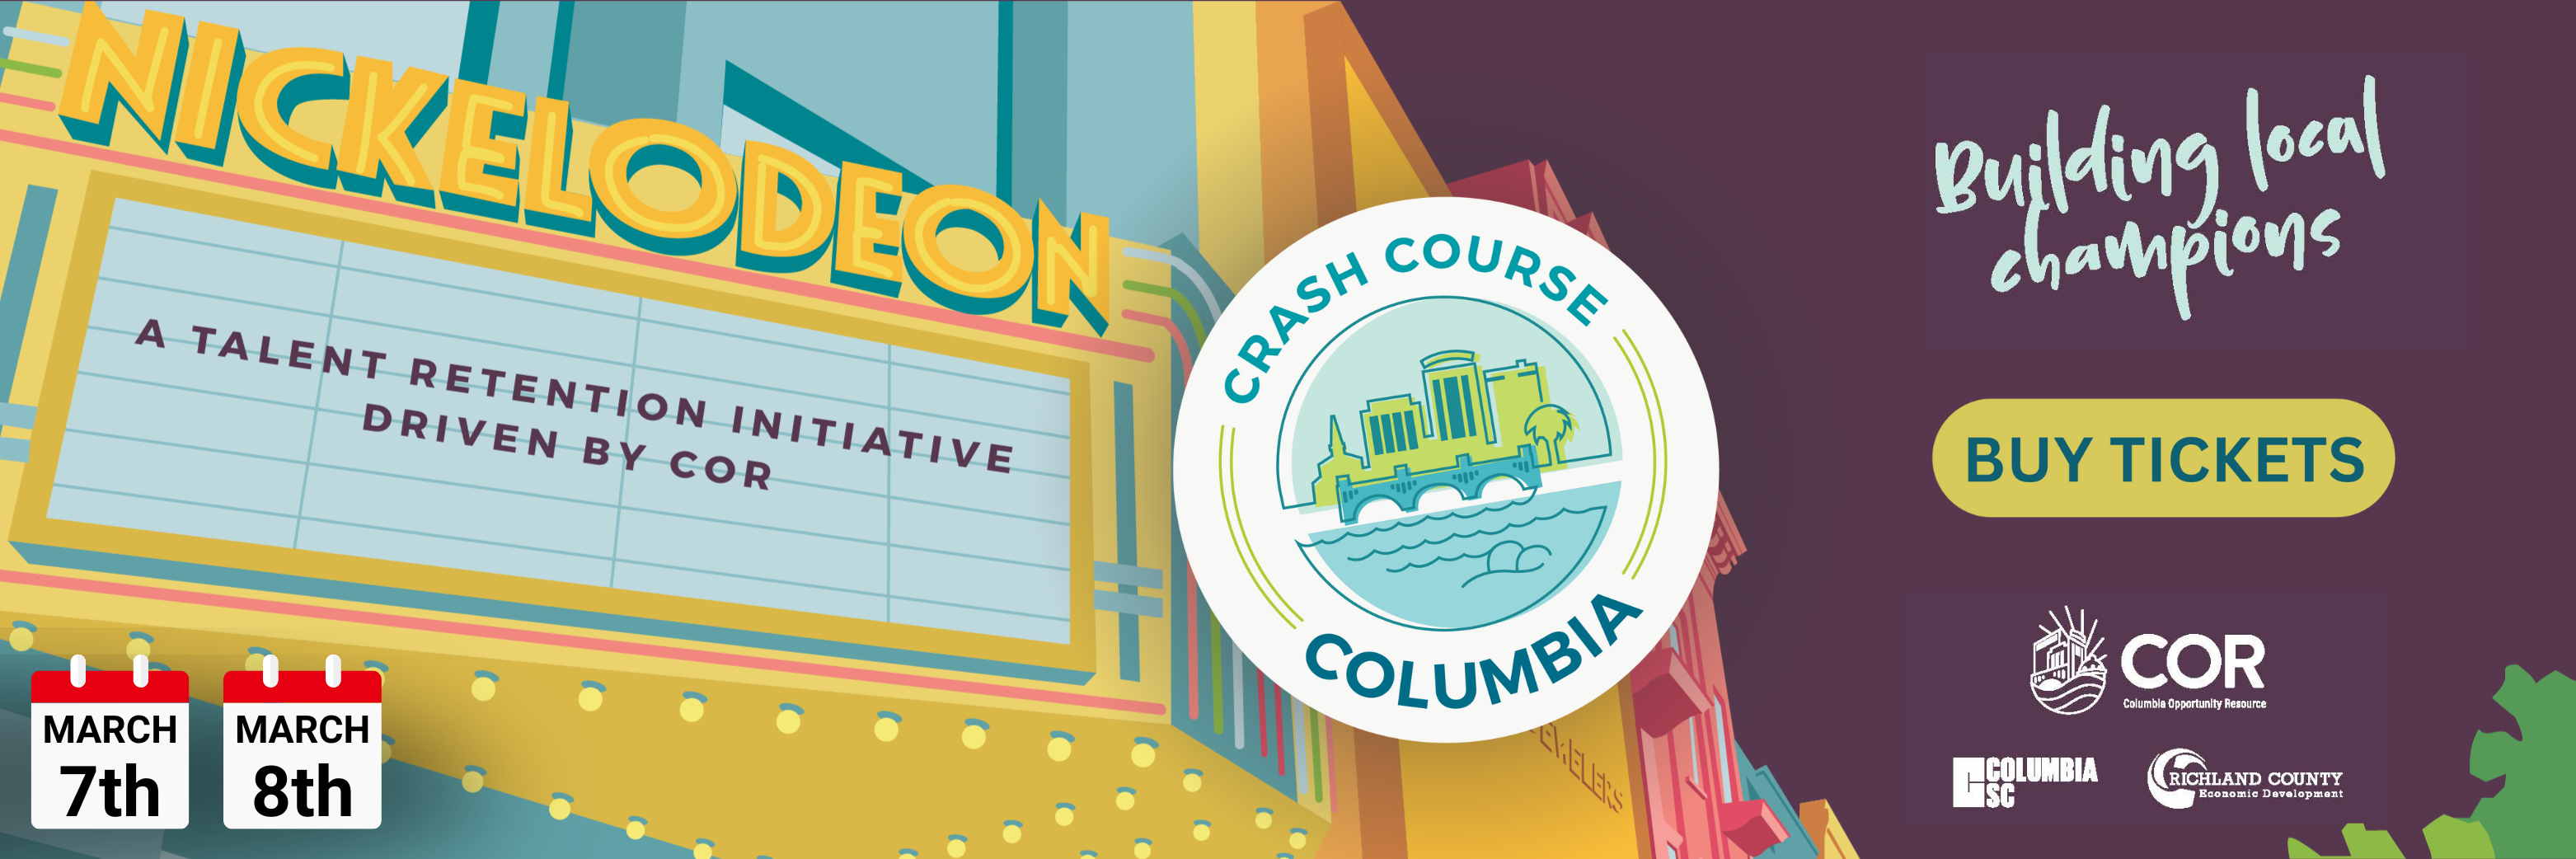 Crash Course Columbia banner | Buy tickets